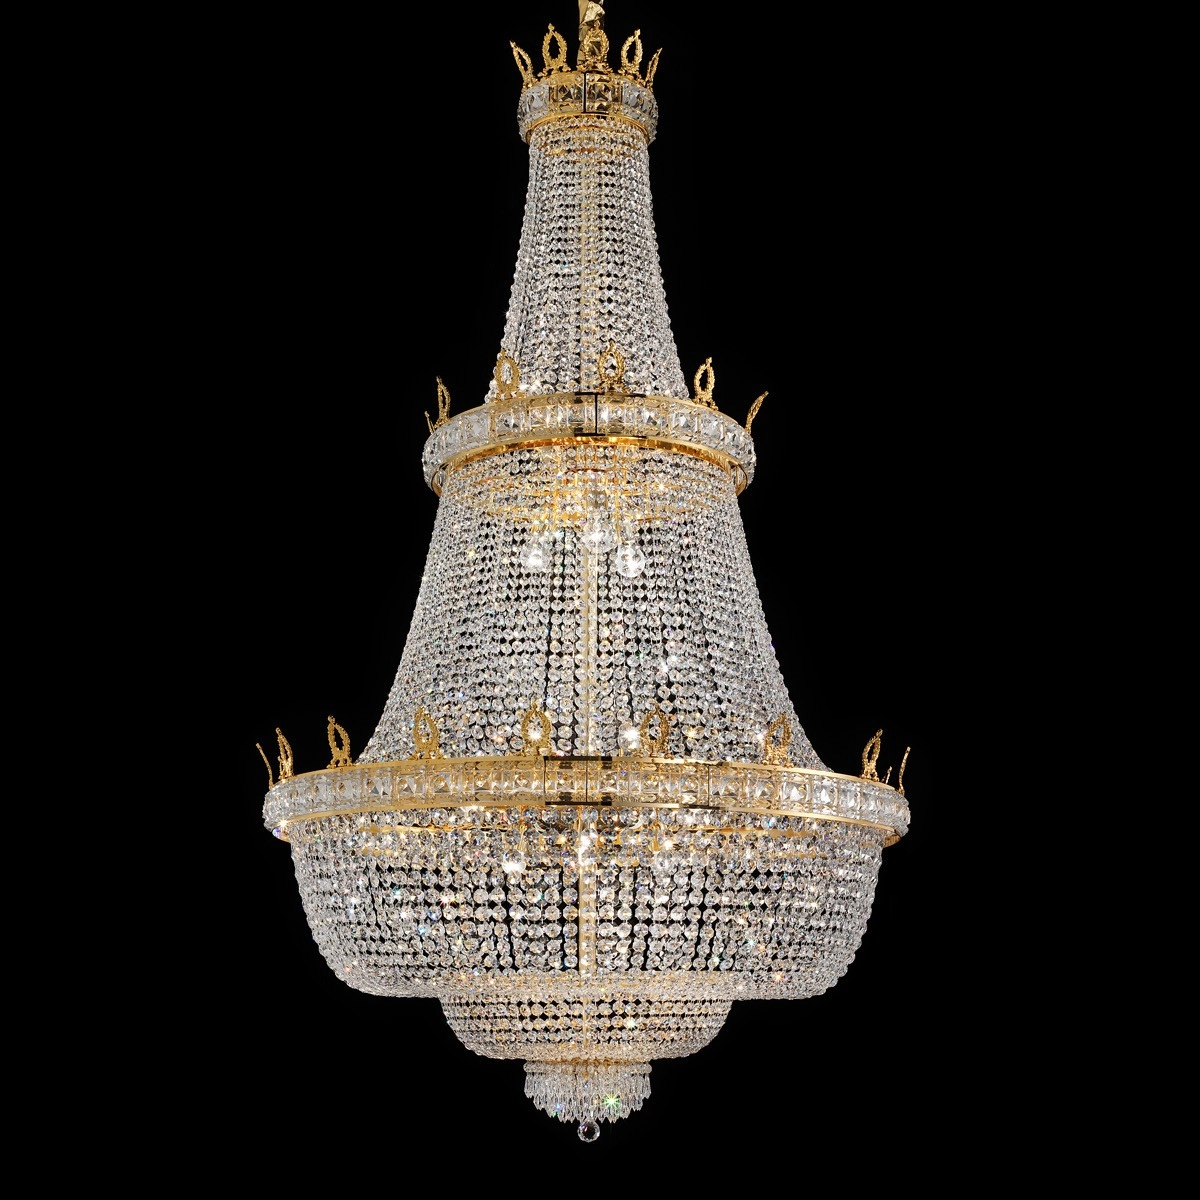 Luxury golden crystal chandelier for foyer